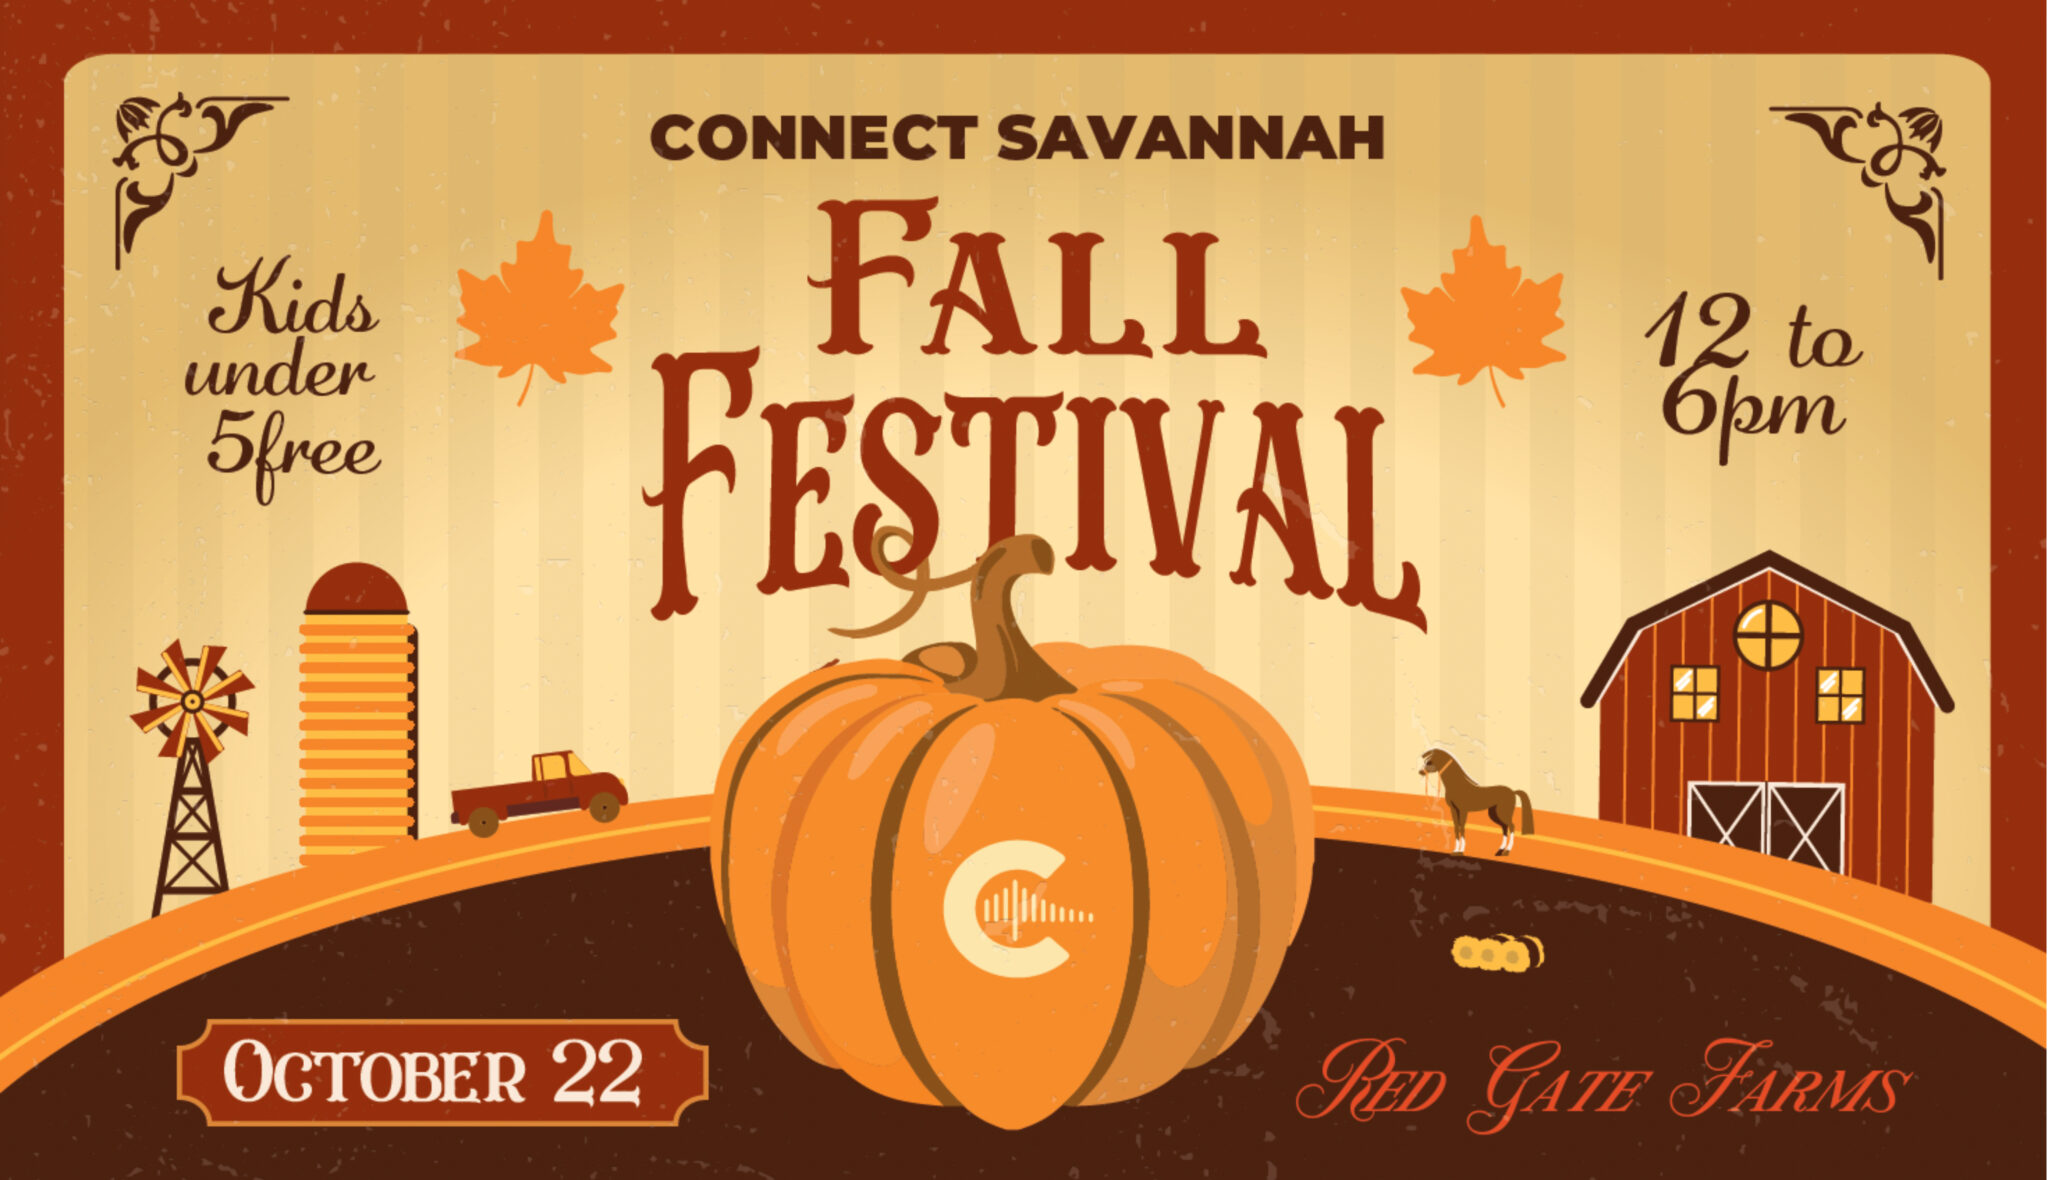 Connect Savannah Fall Festival